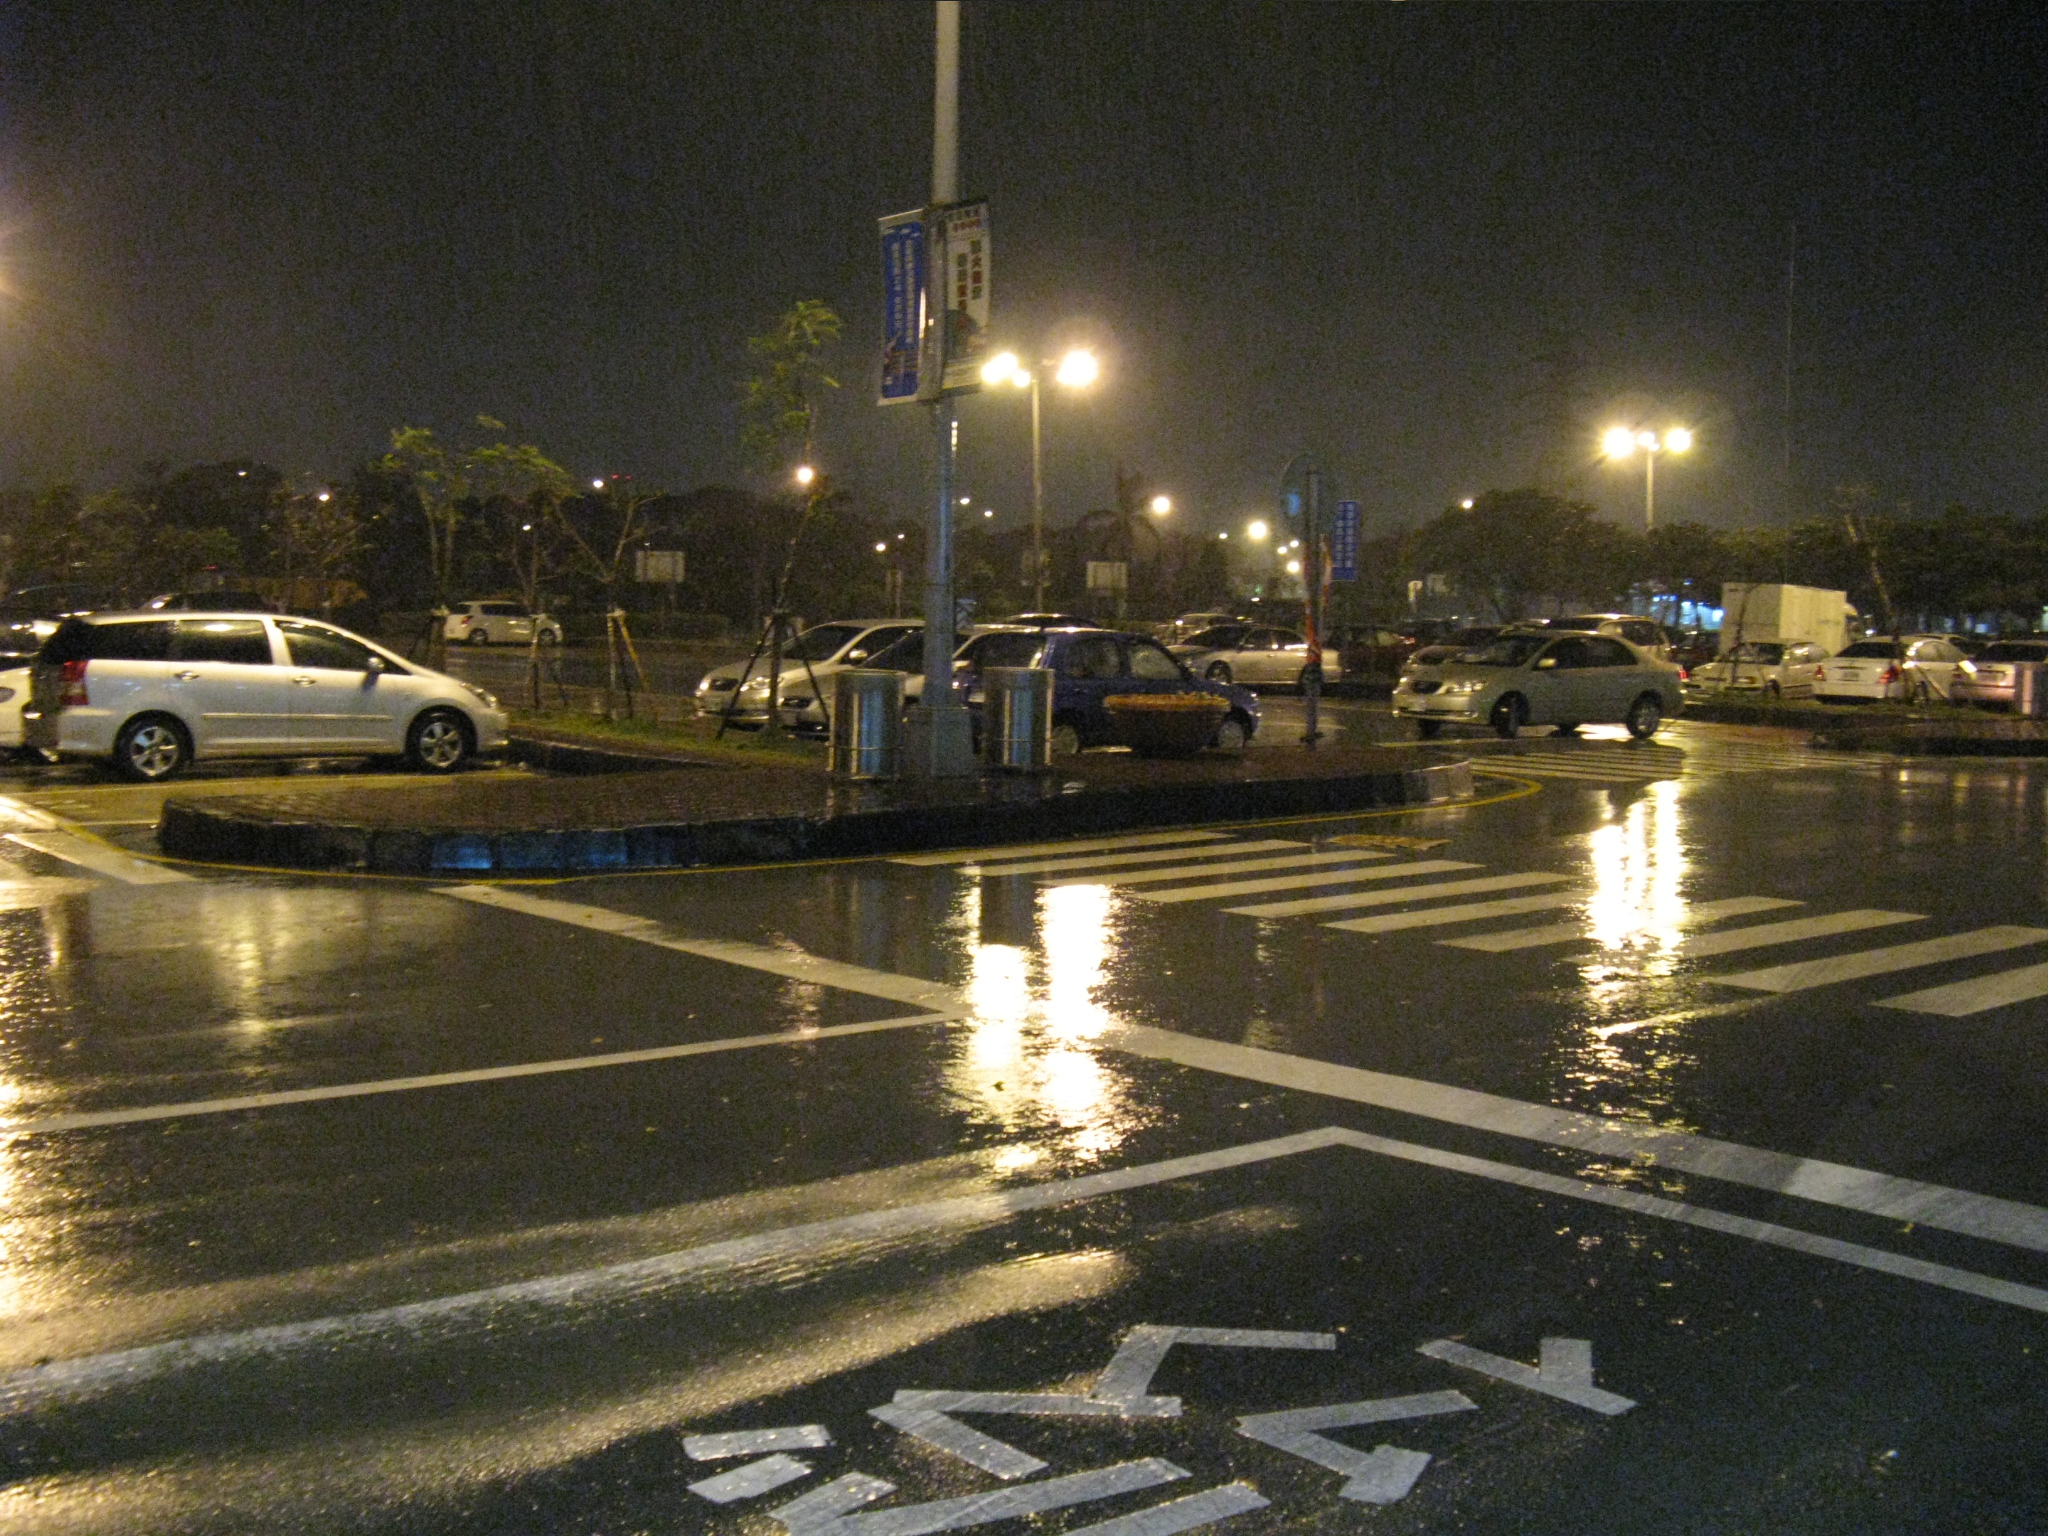 Rainy evening in taiwan photo